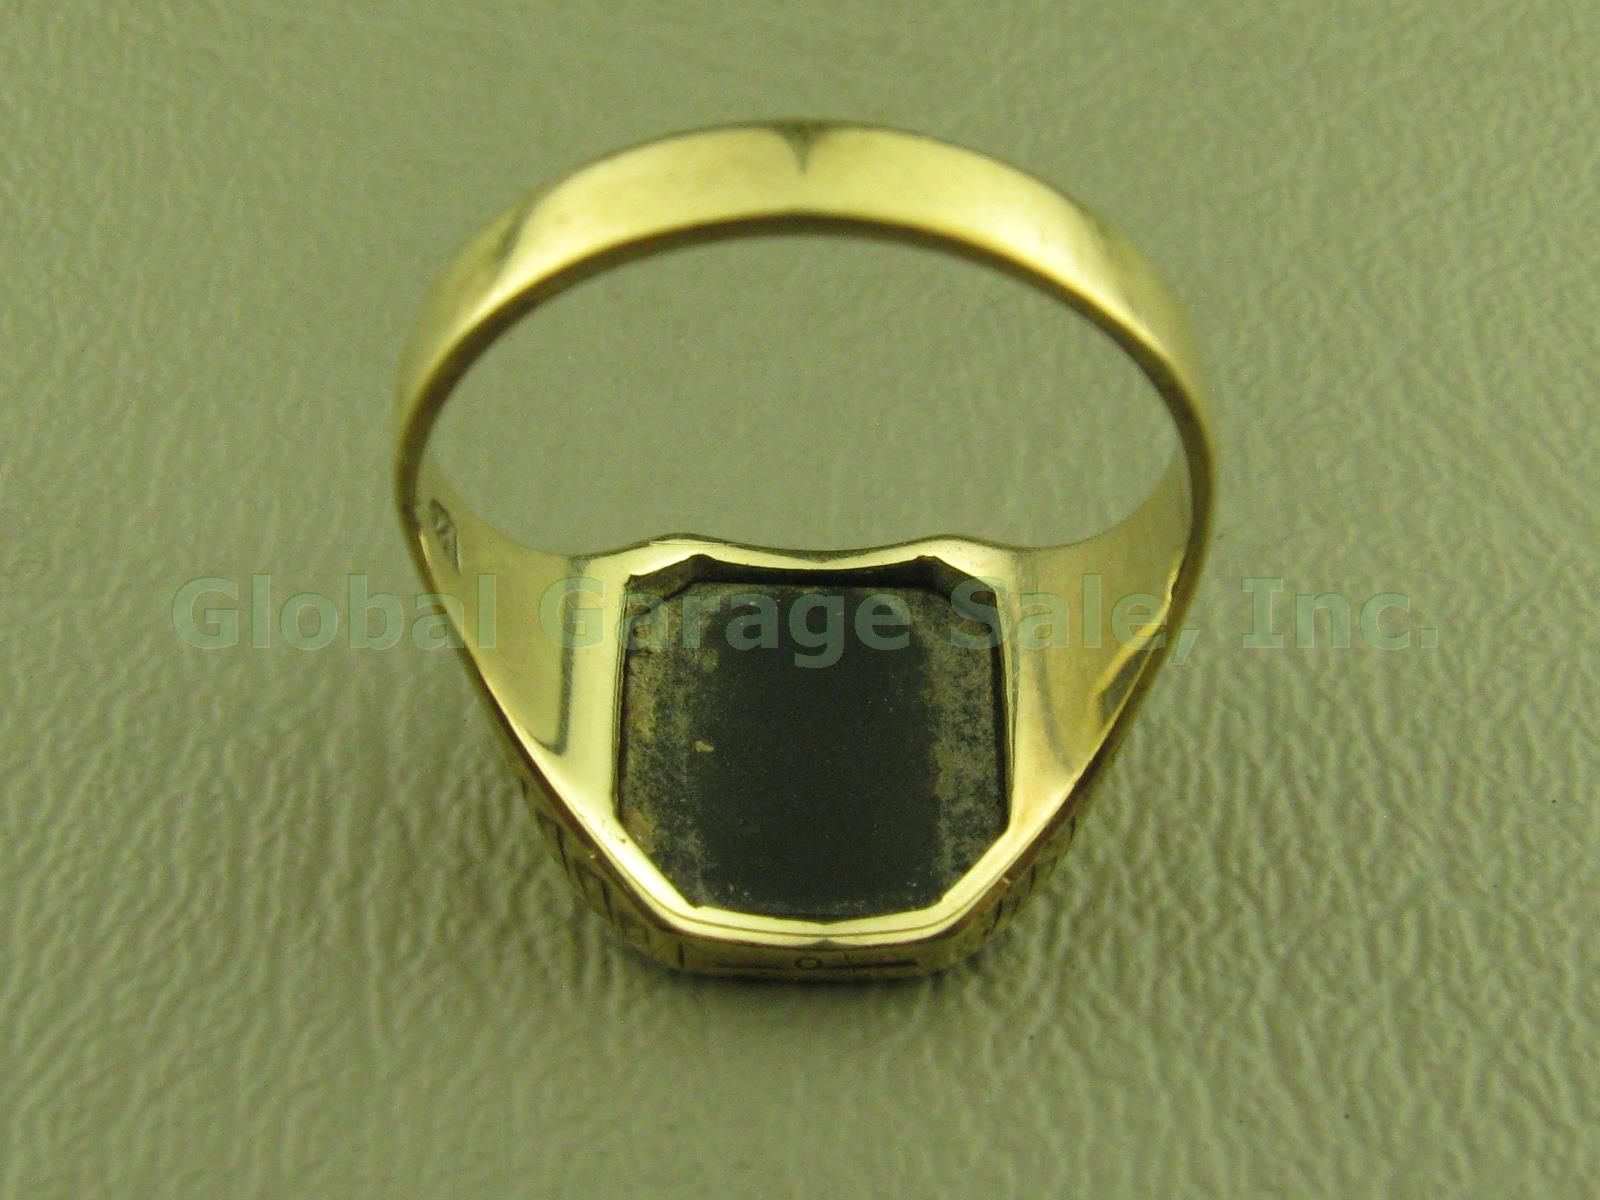 Large Vtg Mens 10k Or 14K Yellow Gold Black Onyx Ring 5.8g Size 10.5 Or 10.75 NR 2